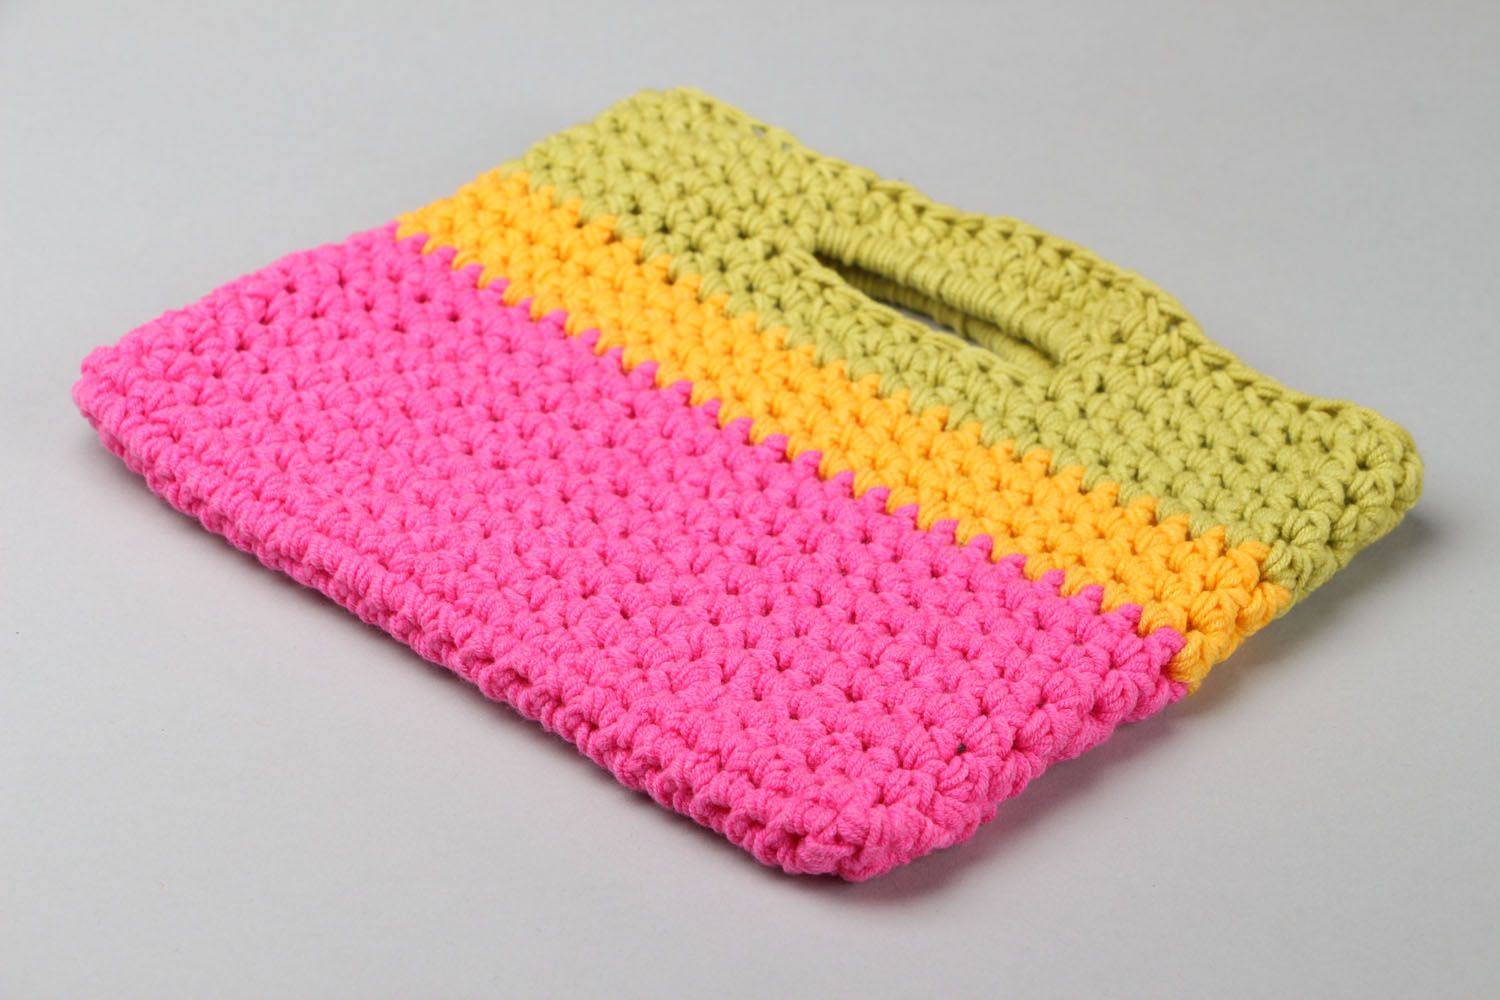 Cotton crocheted bag photo 3